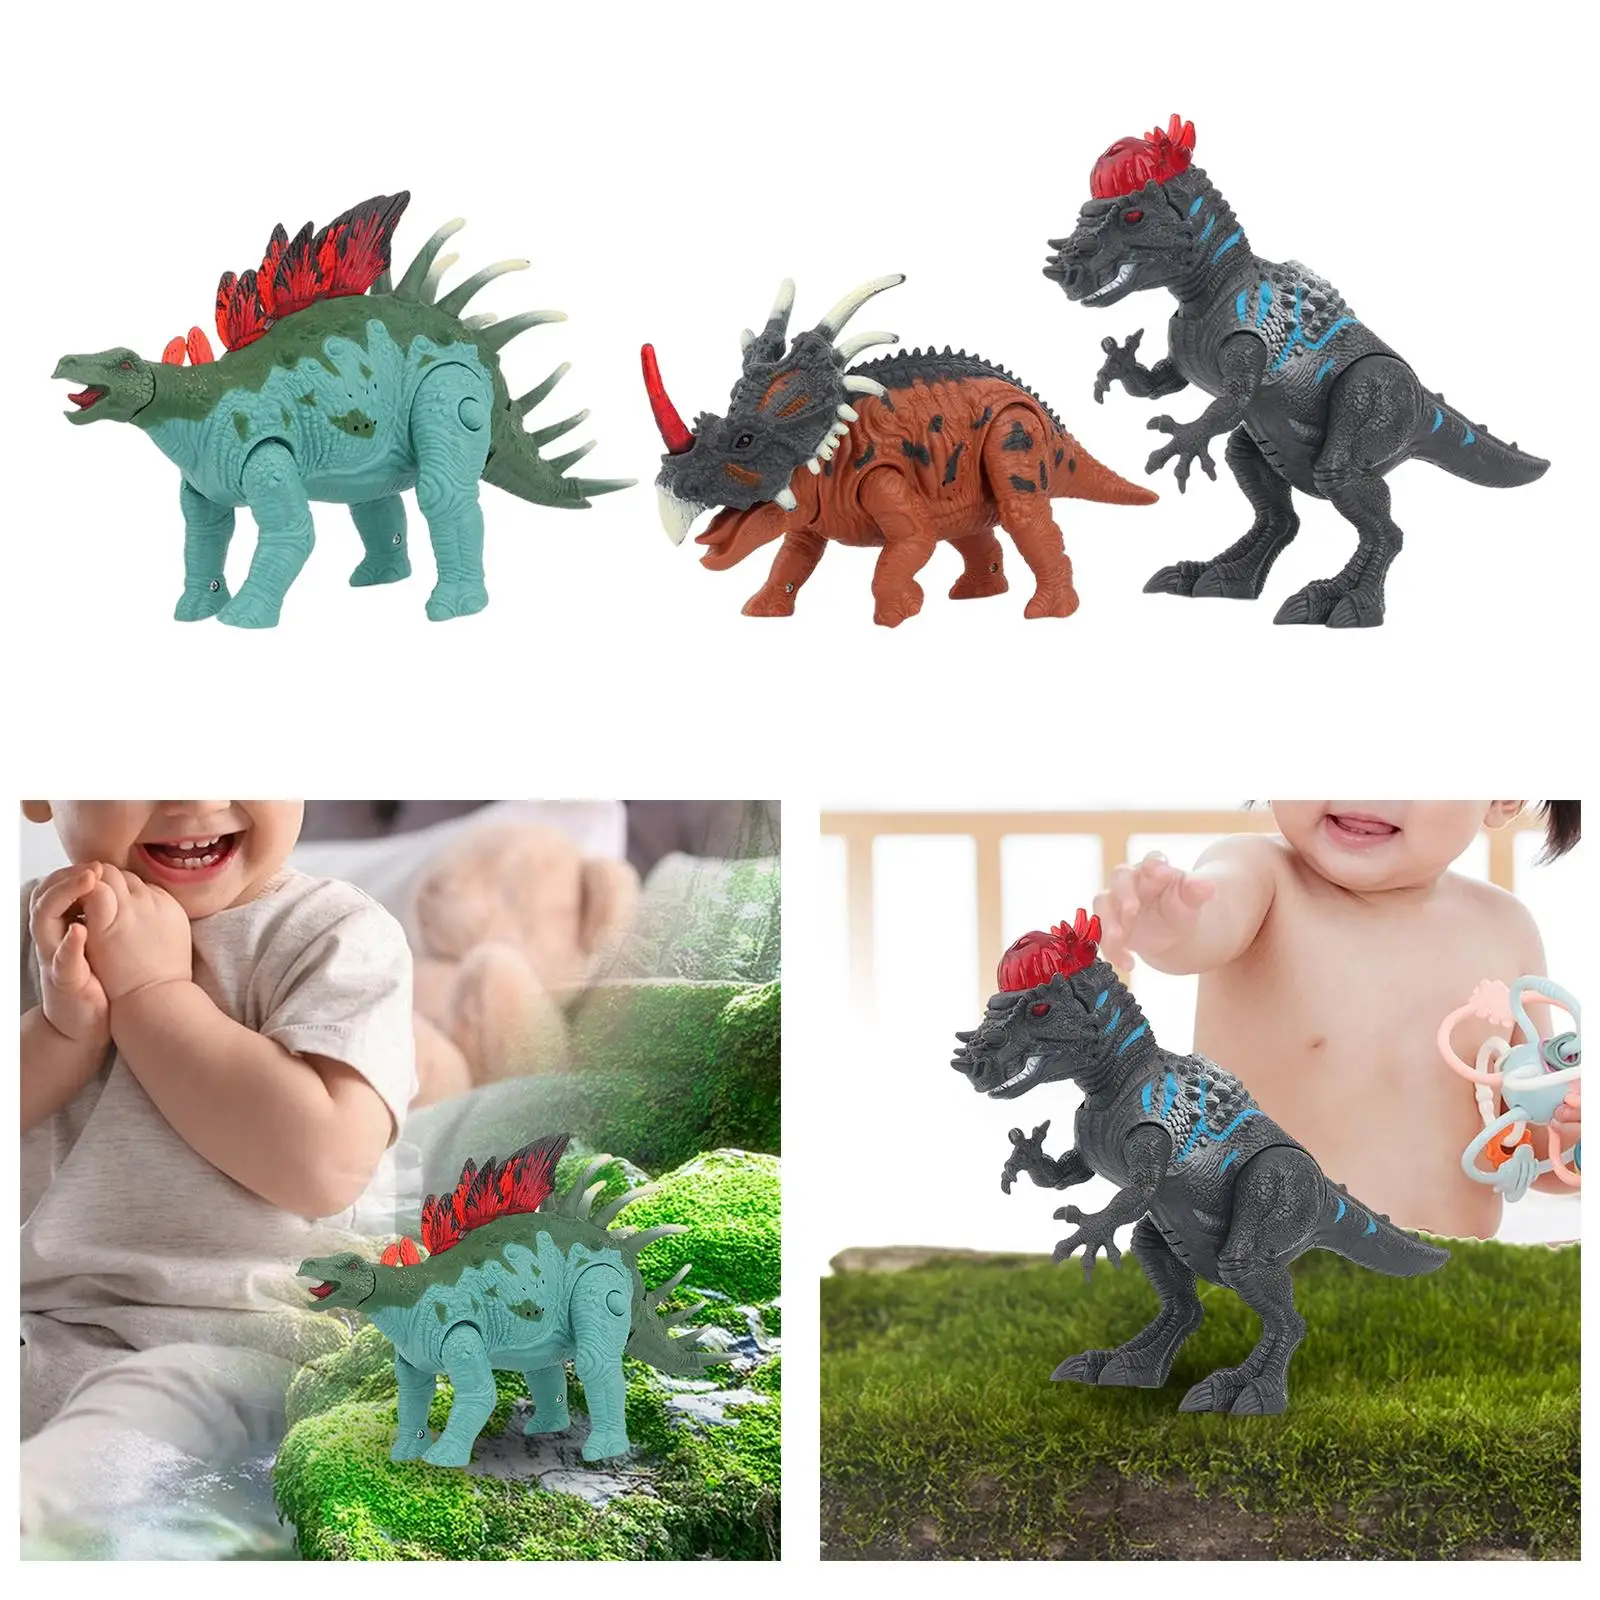 Dinosaur Toy for Kids Action Figure Dinosaur Model Mechanical Sounds Swing Arm Electric Dinosaur Toys for Boys Girls 3 5, 4 7,8